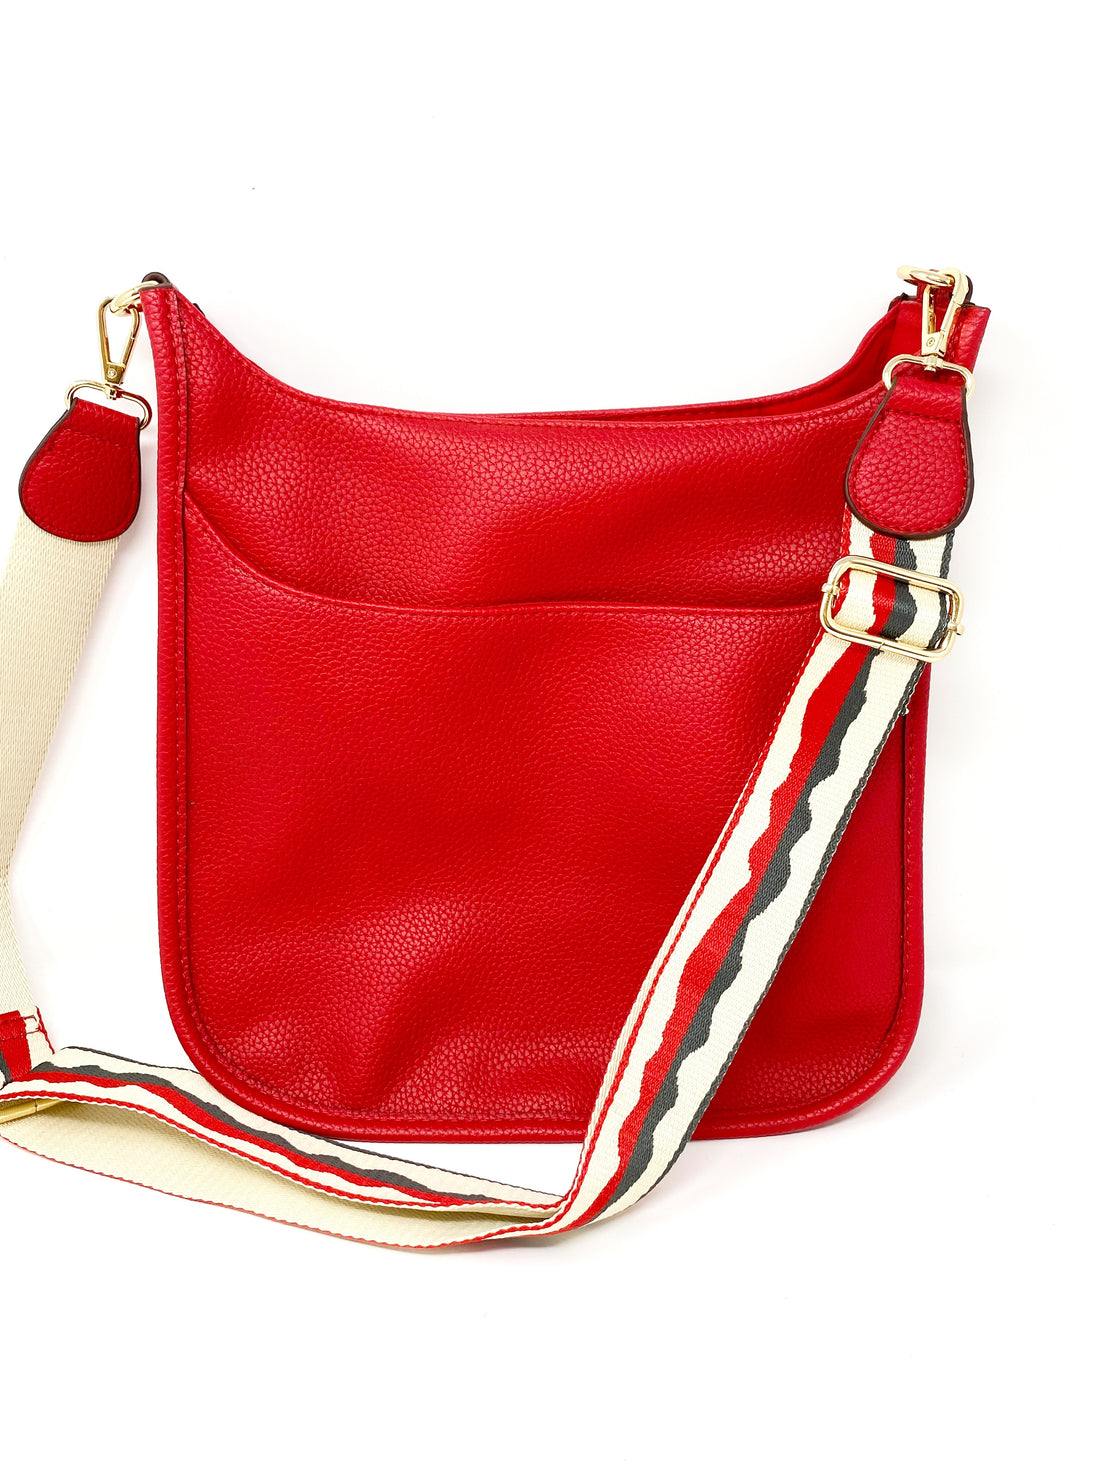 Saddle Bag in Vegan Leather in Bright Red